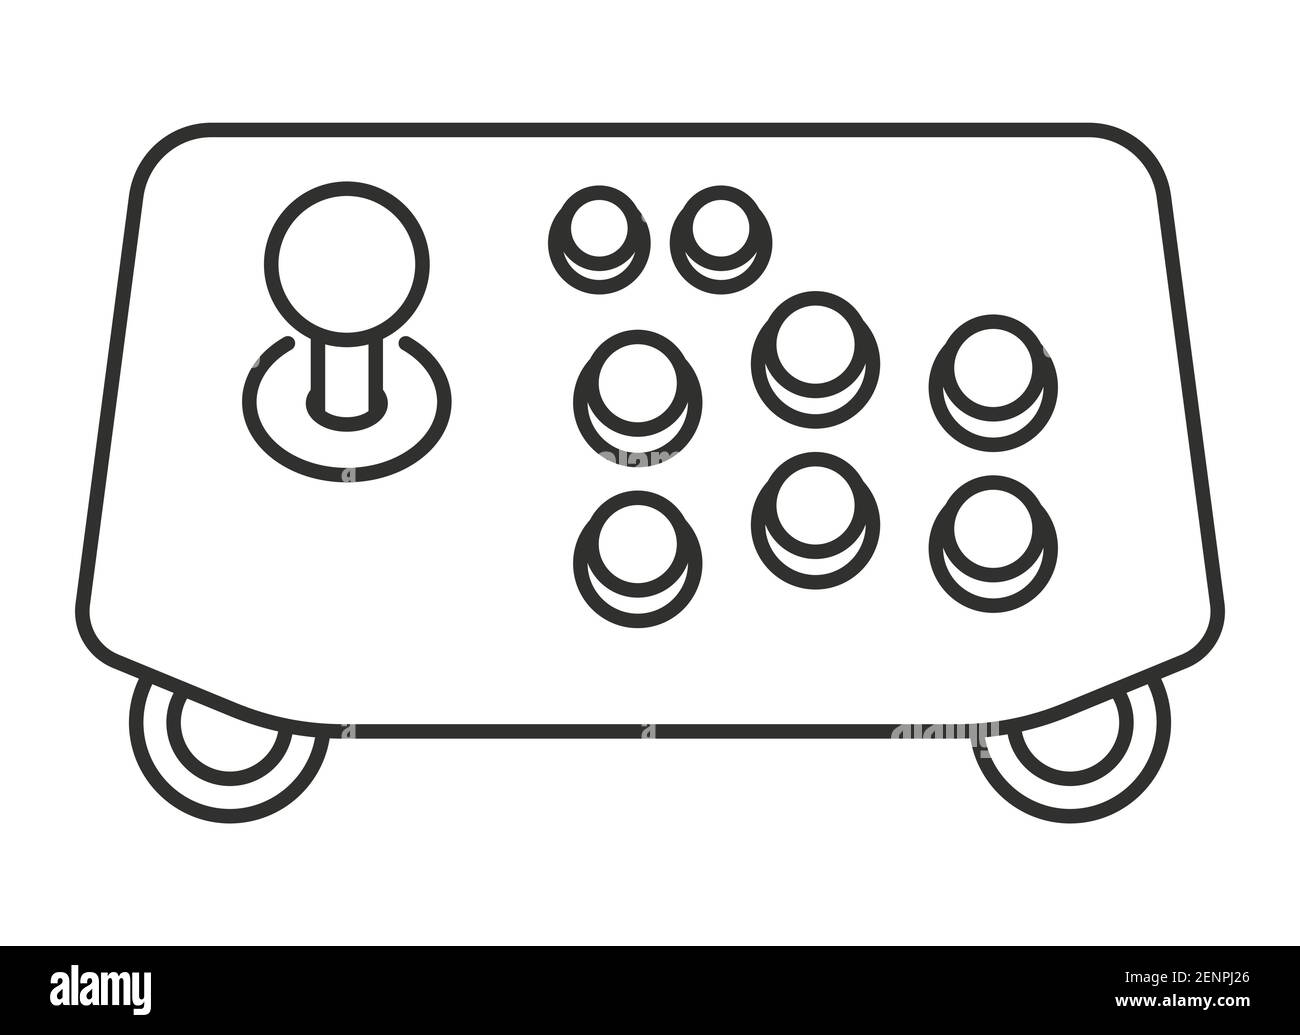 Arcade joystick controller line art icon for apps or website Stock Vector